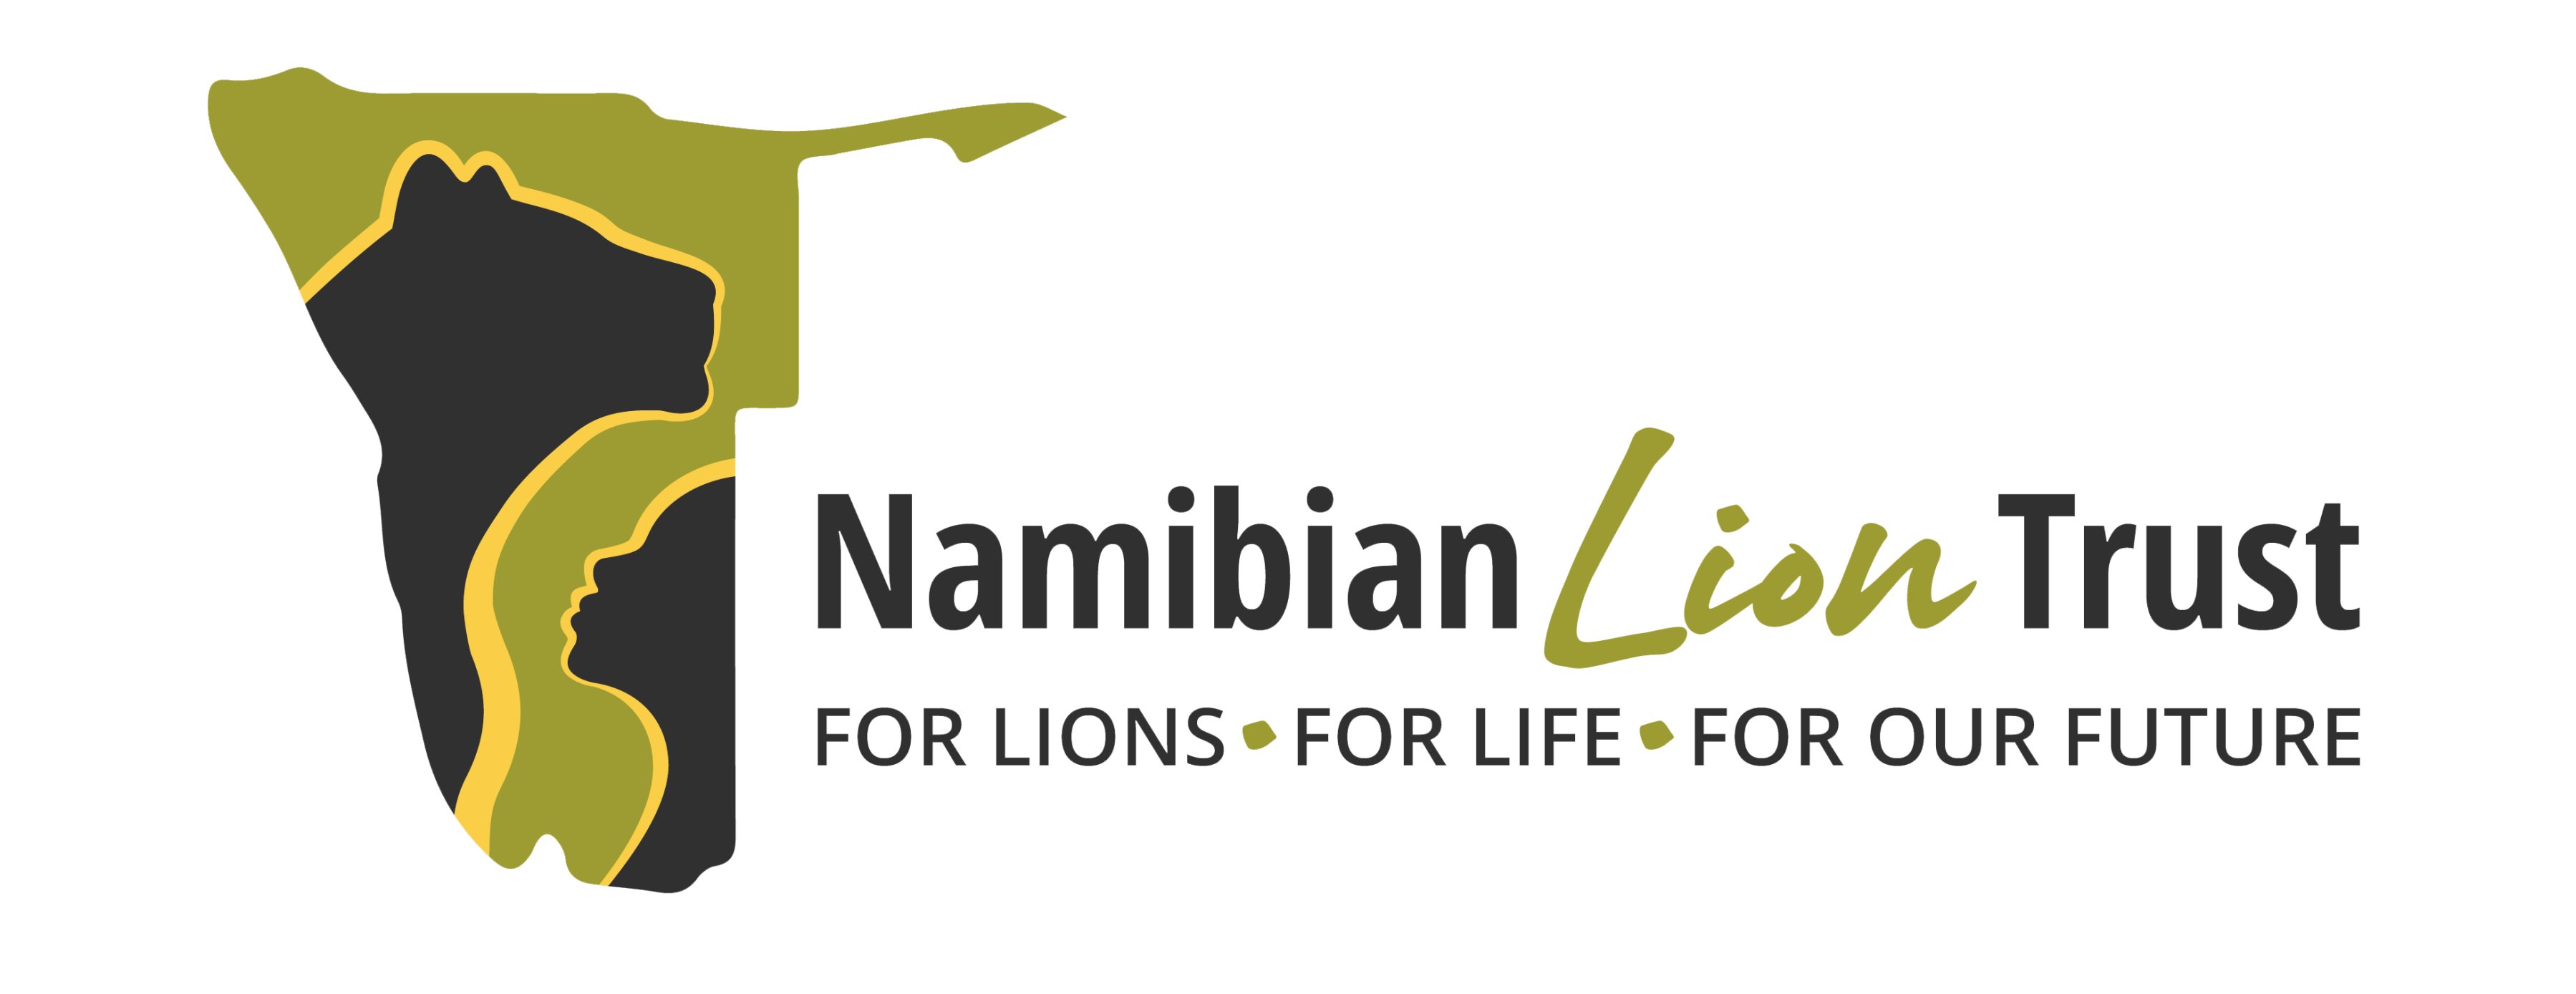 Namibian Lion Trust Logo